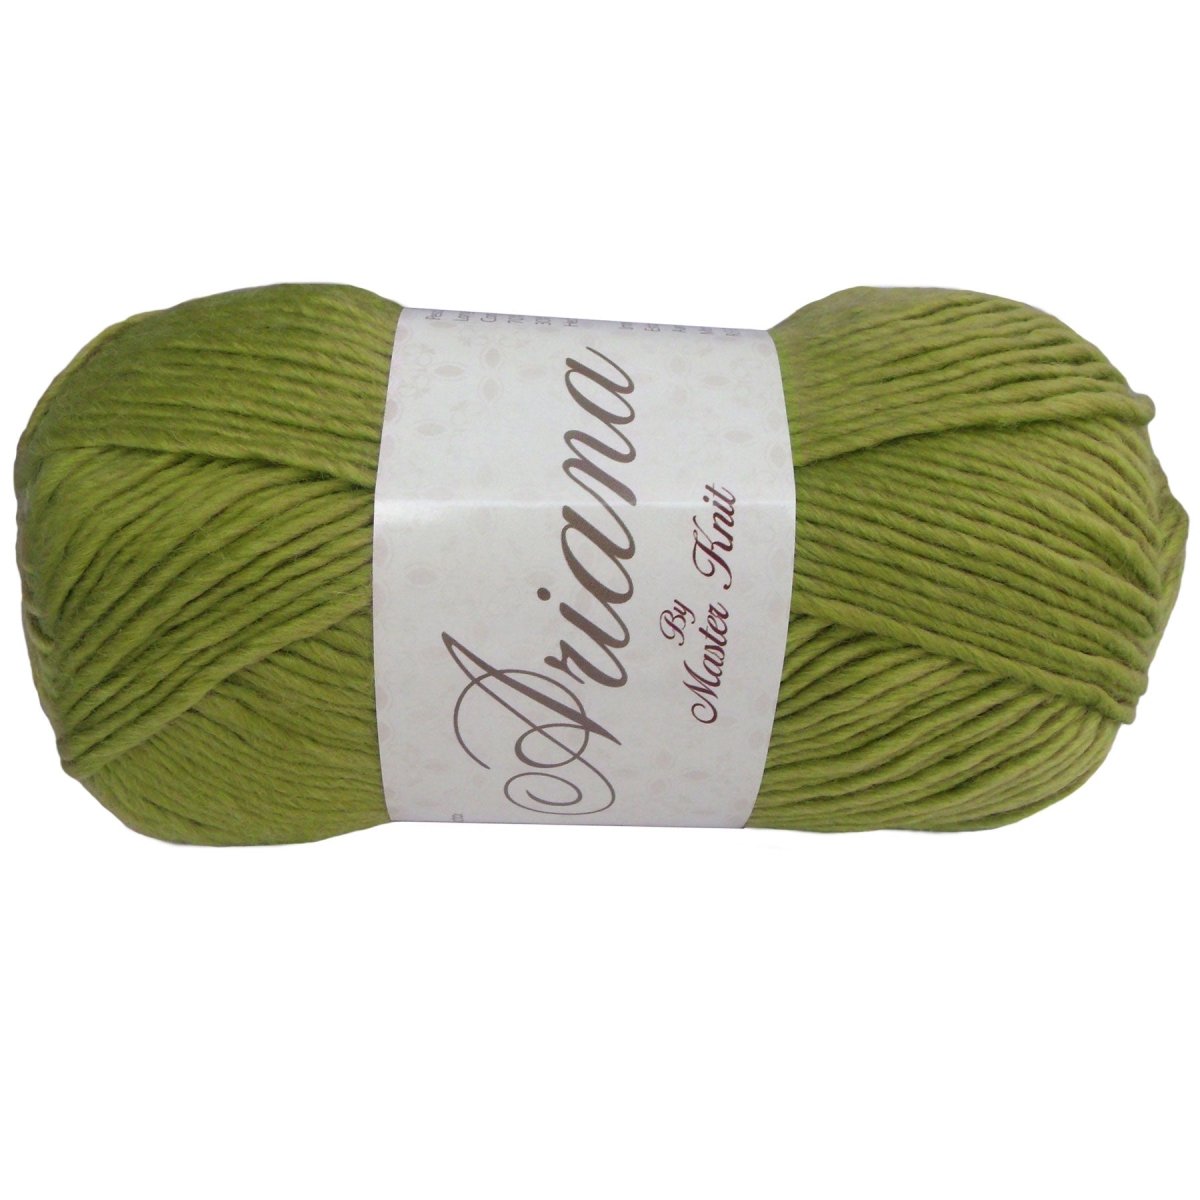 ARIANA - Aran - Crochetstores9510-601